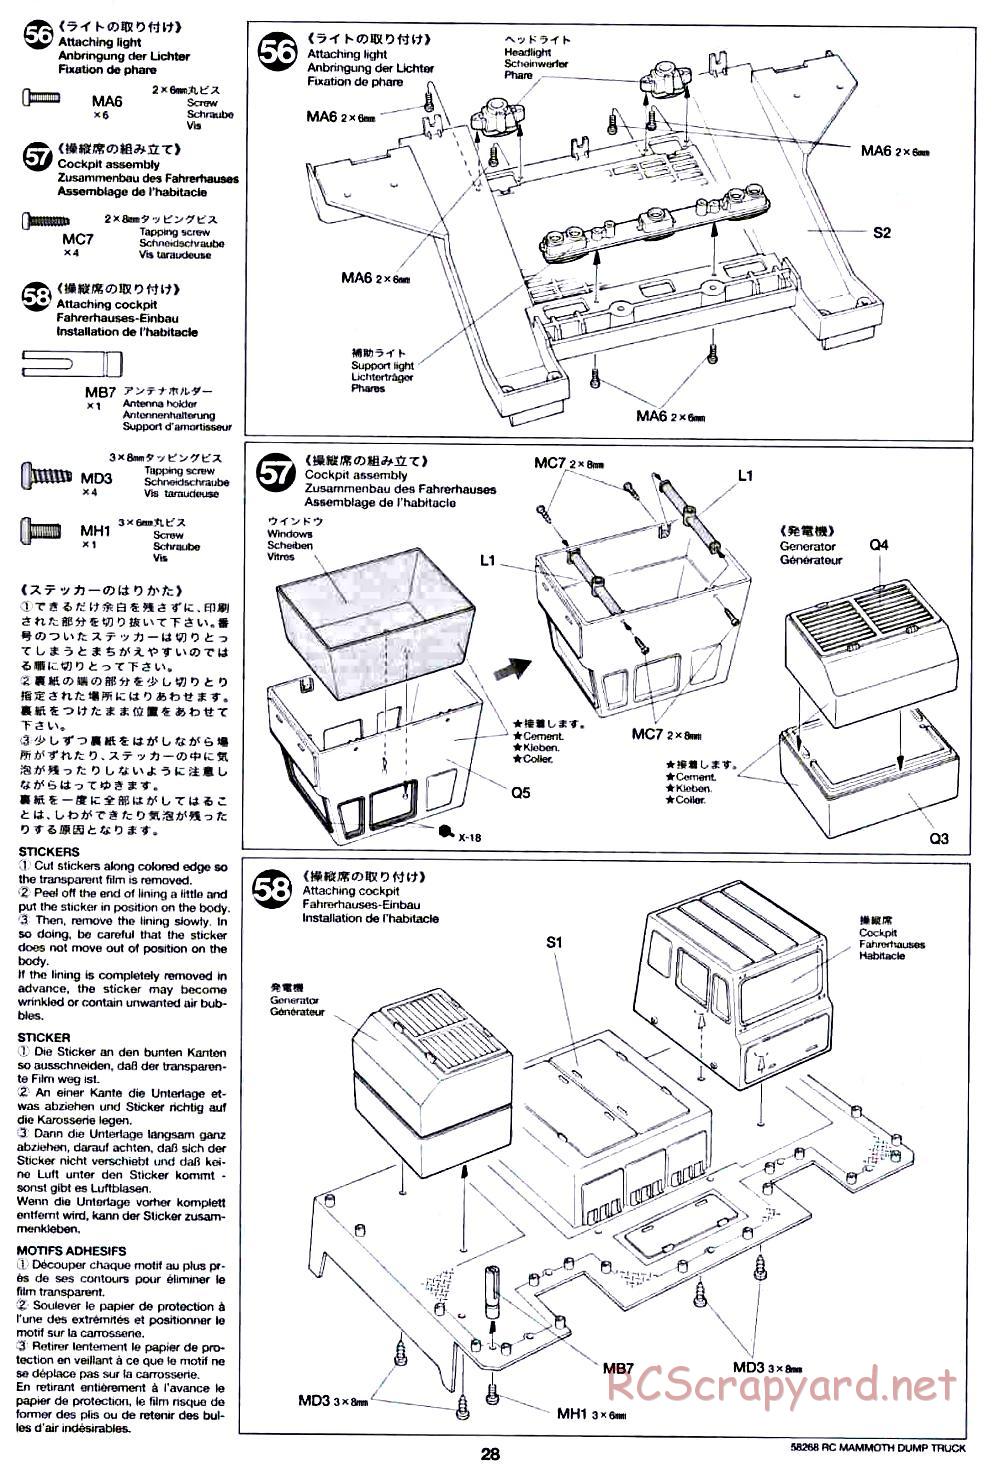 Tamiya - Mammoth Dump Truck Chassis - Manual - Page 28